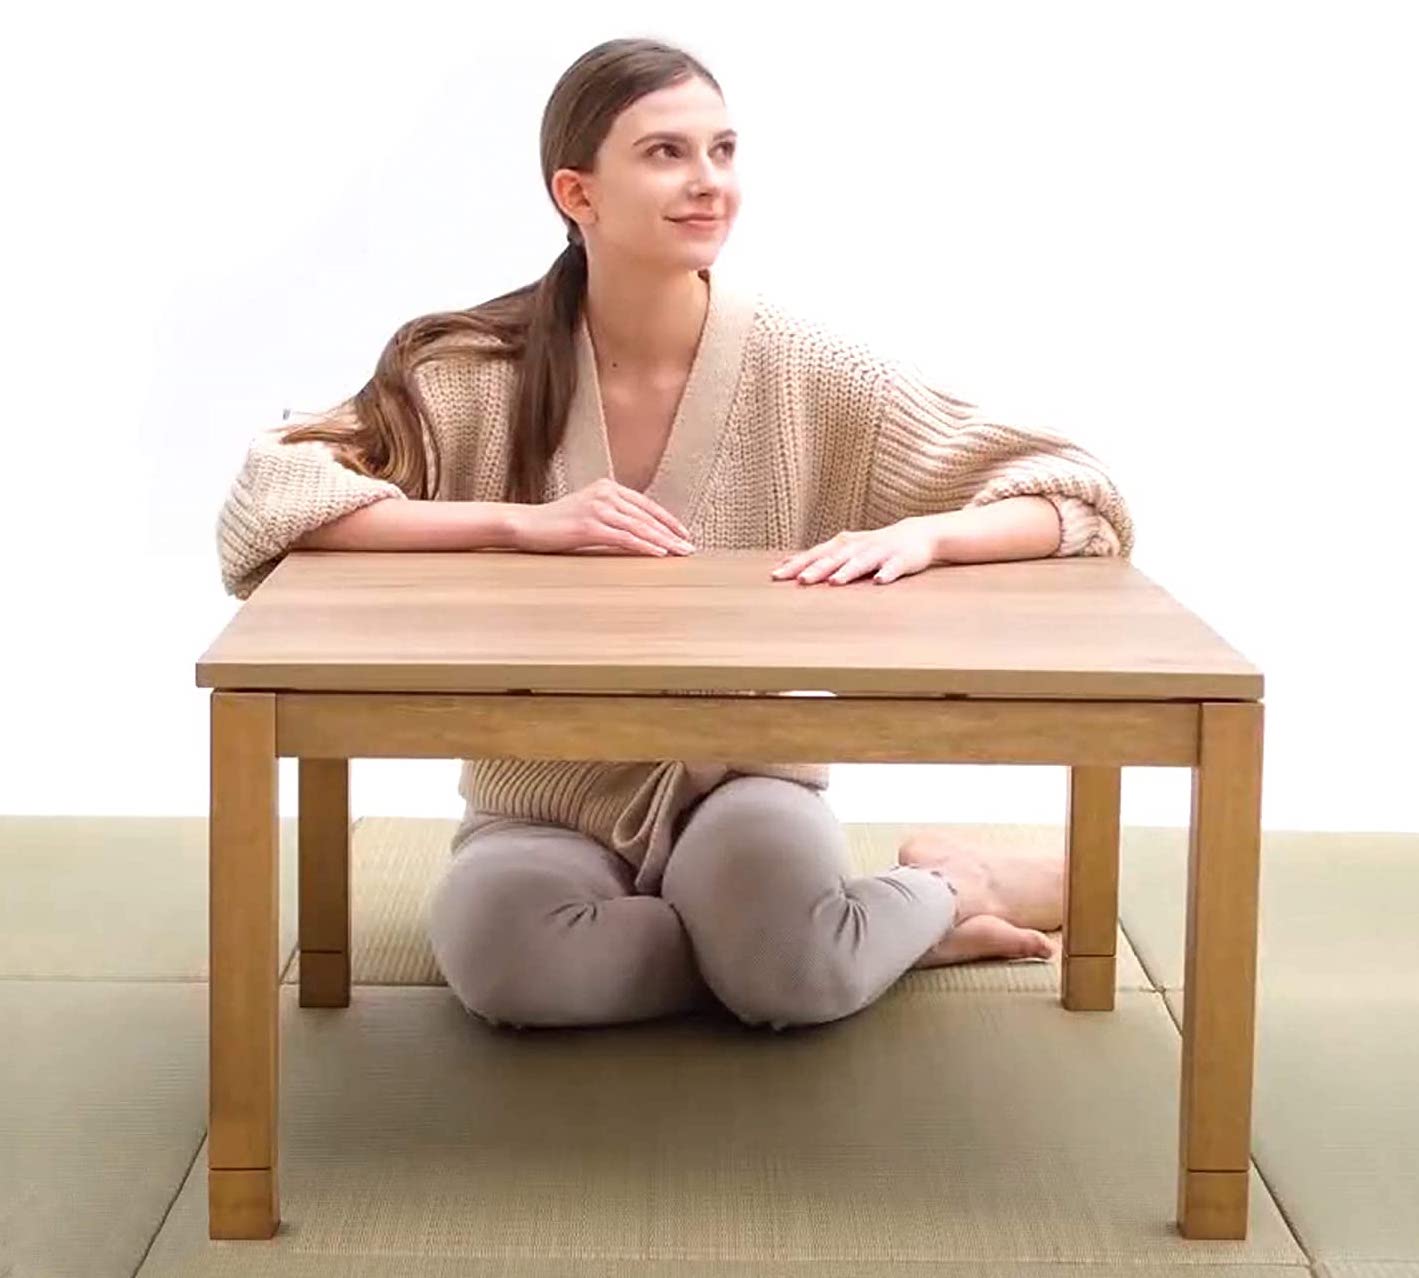 Best kotatsu for work- BJDesign Wooden Chabudai with lady sitting